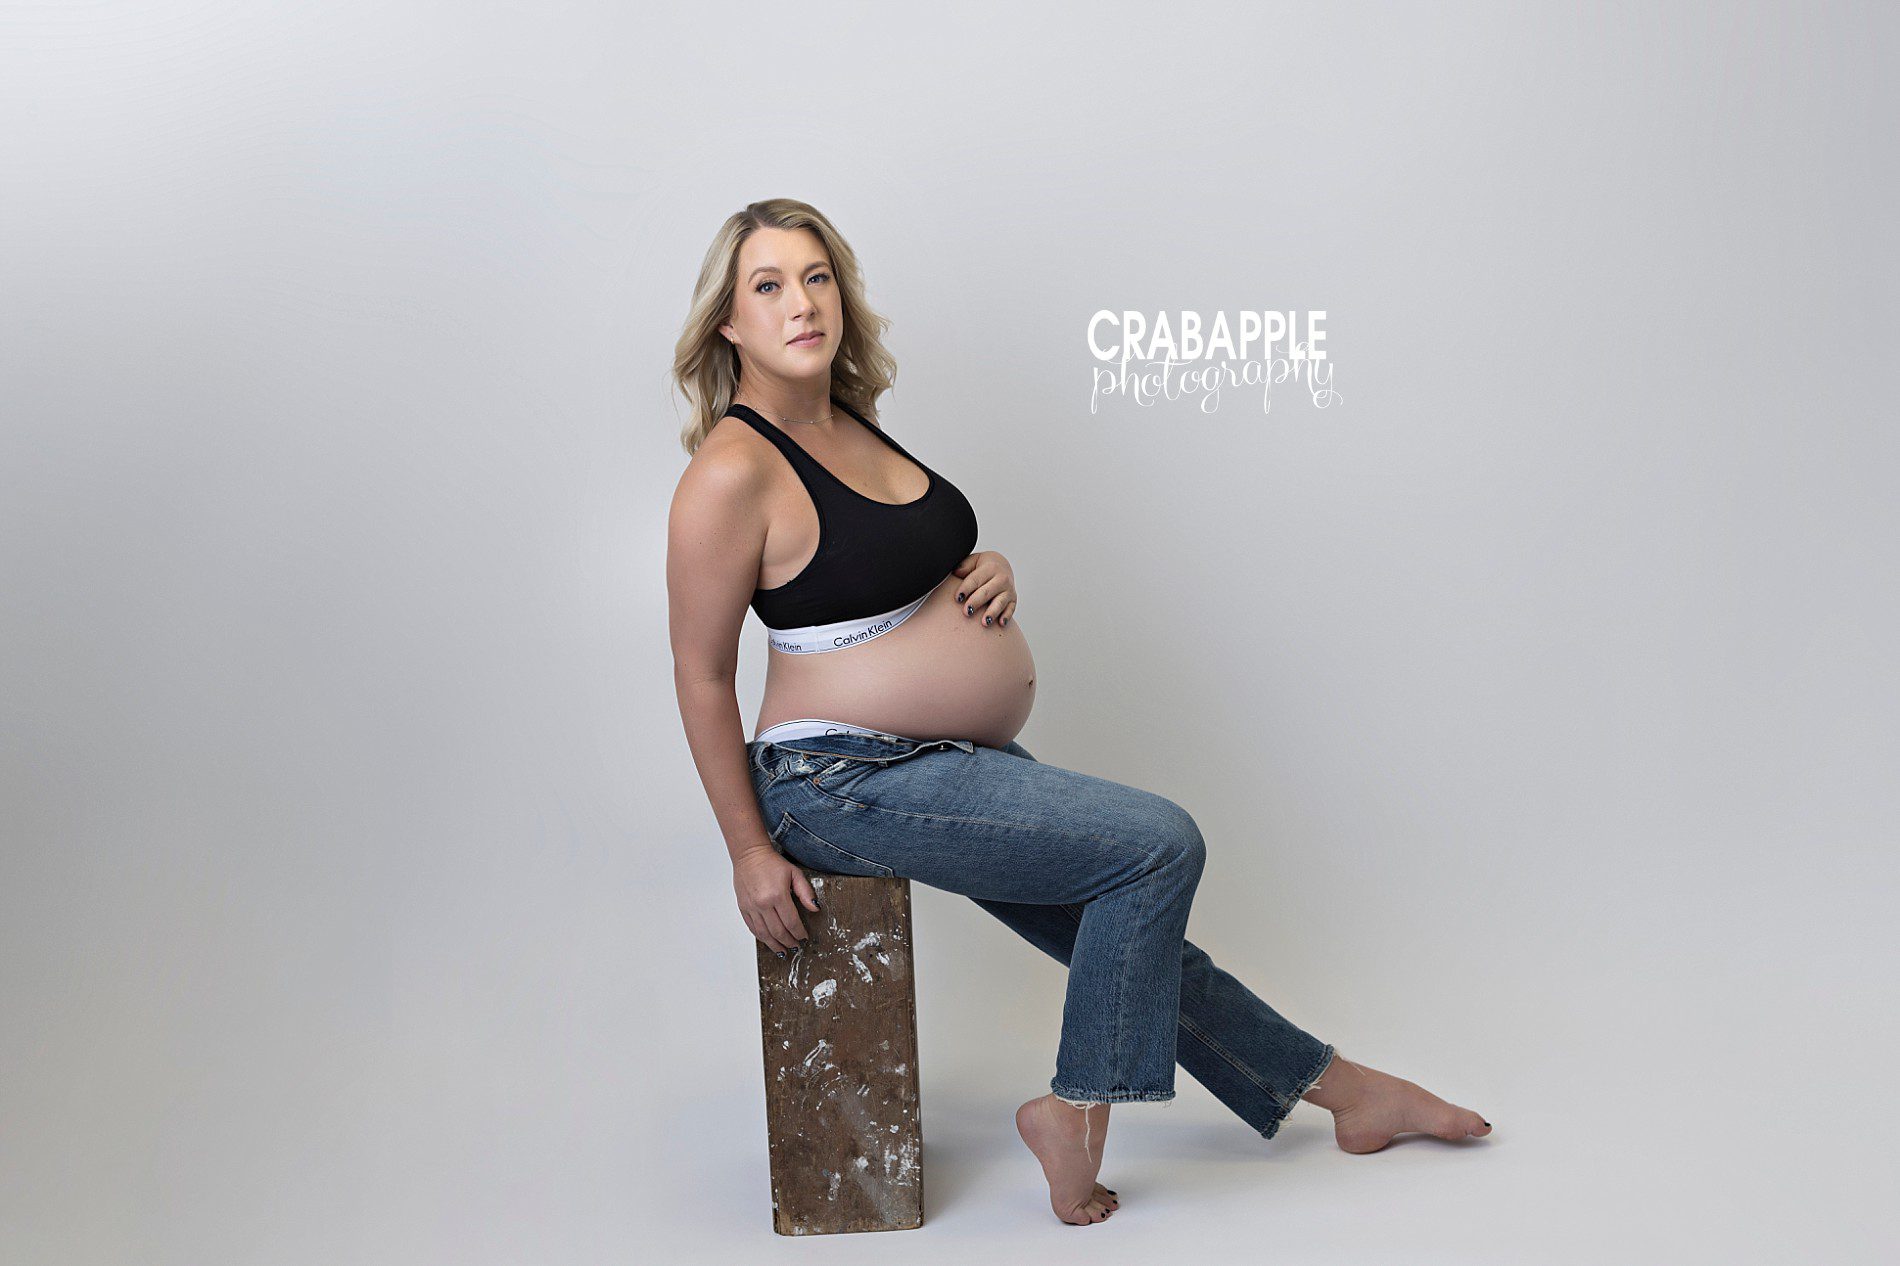 Calvin Klein Pregnancy Portraits · Crabapple Photography